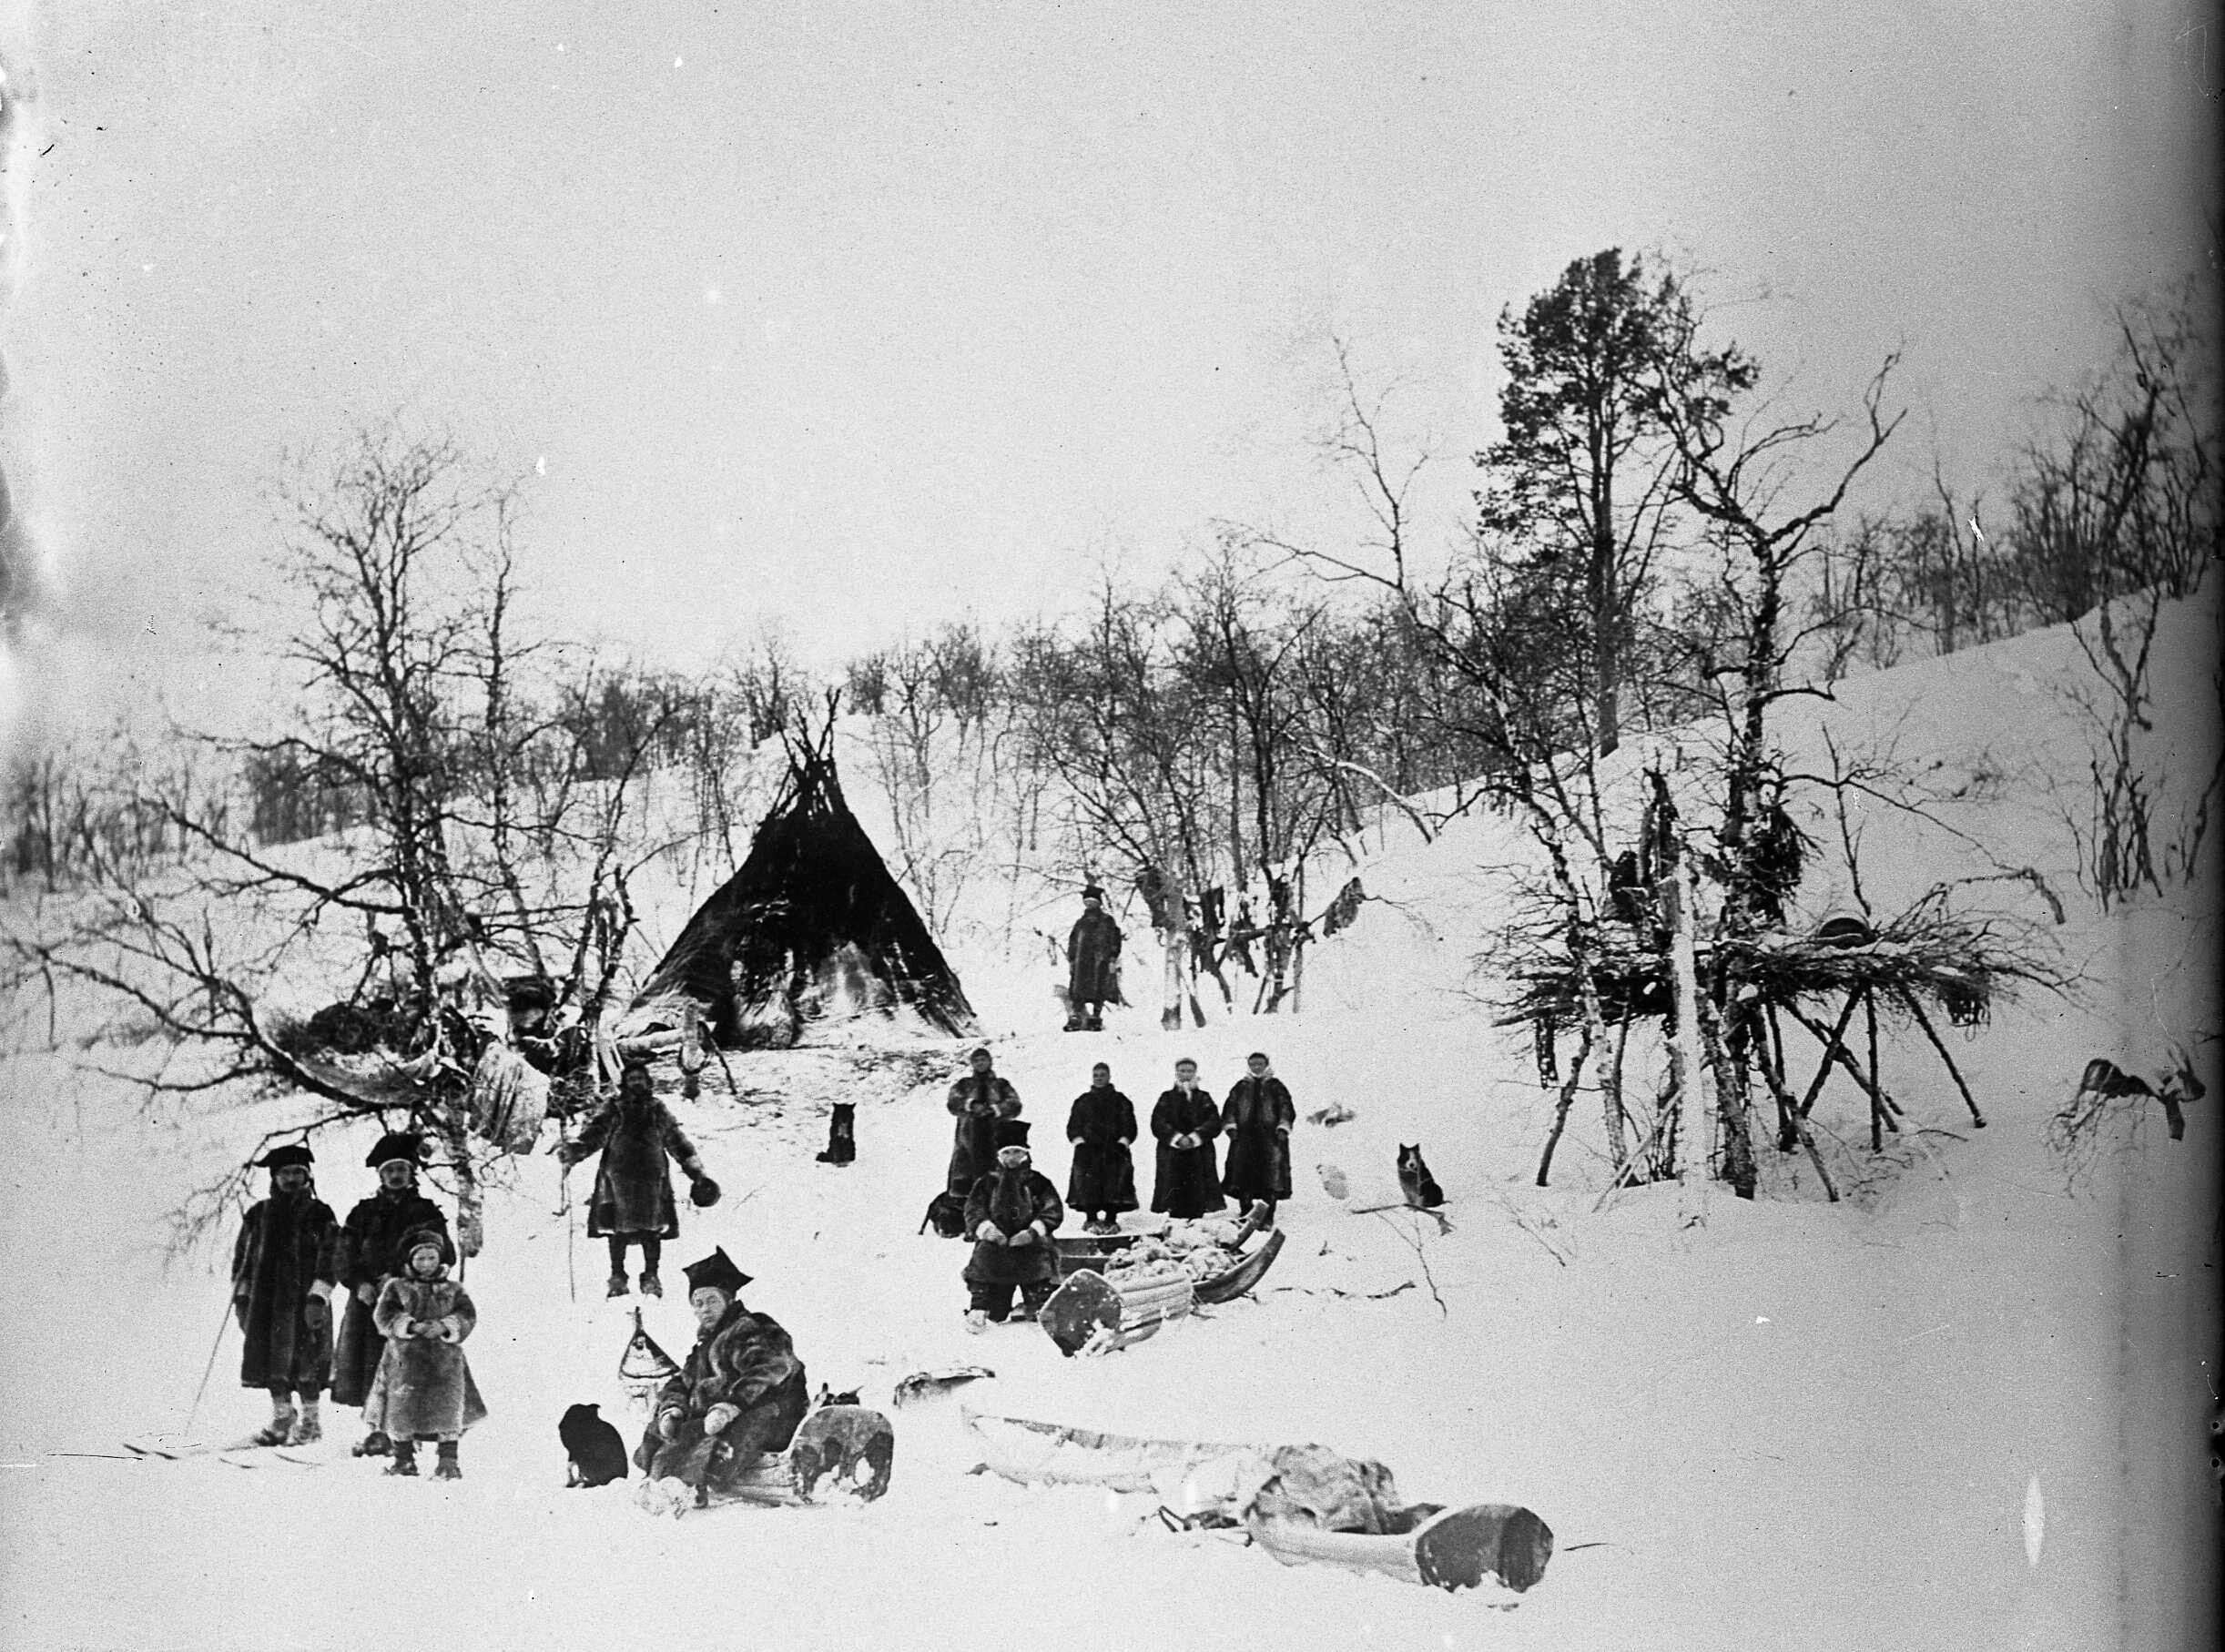 Финнмарк (Финмаркен), Норвегия, 1897. Фотограф Северин Ворм-Петерсен